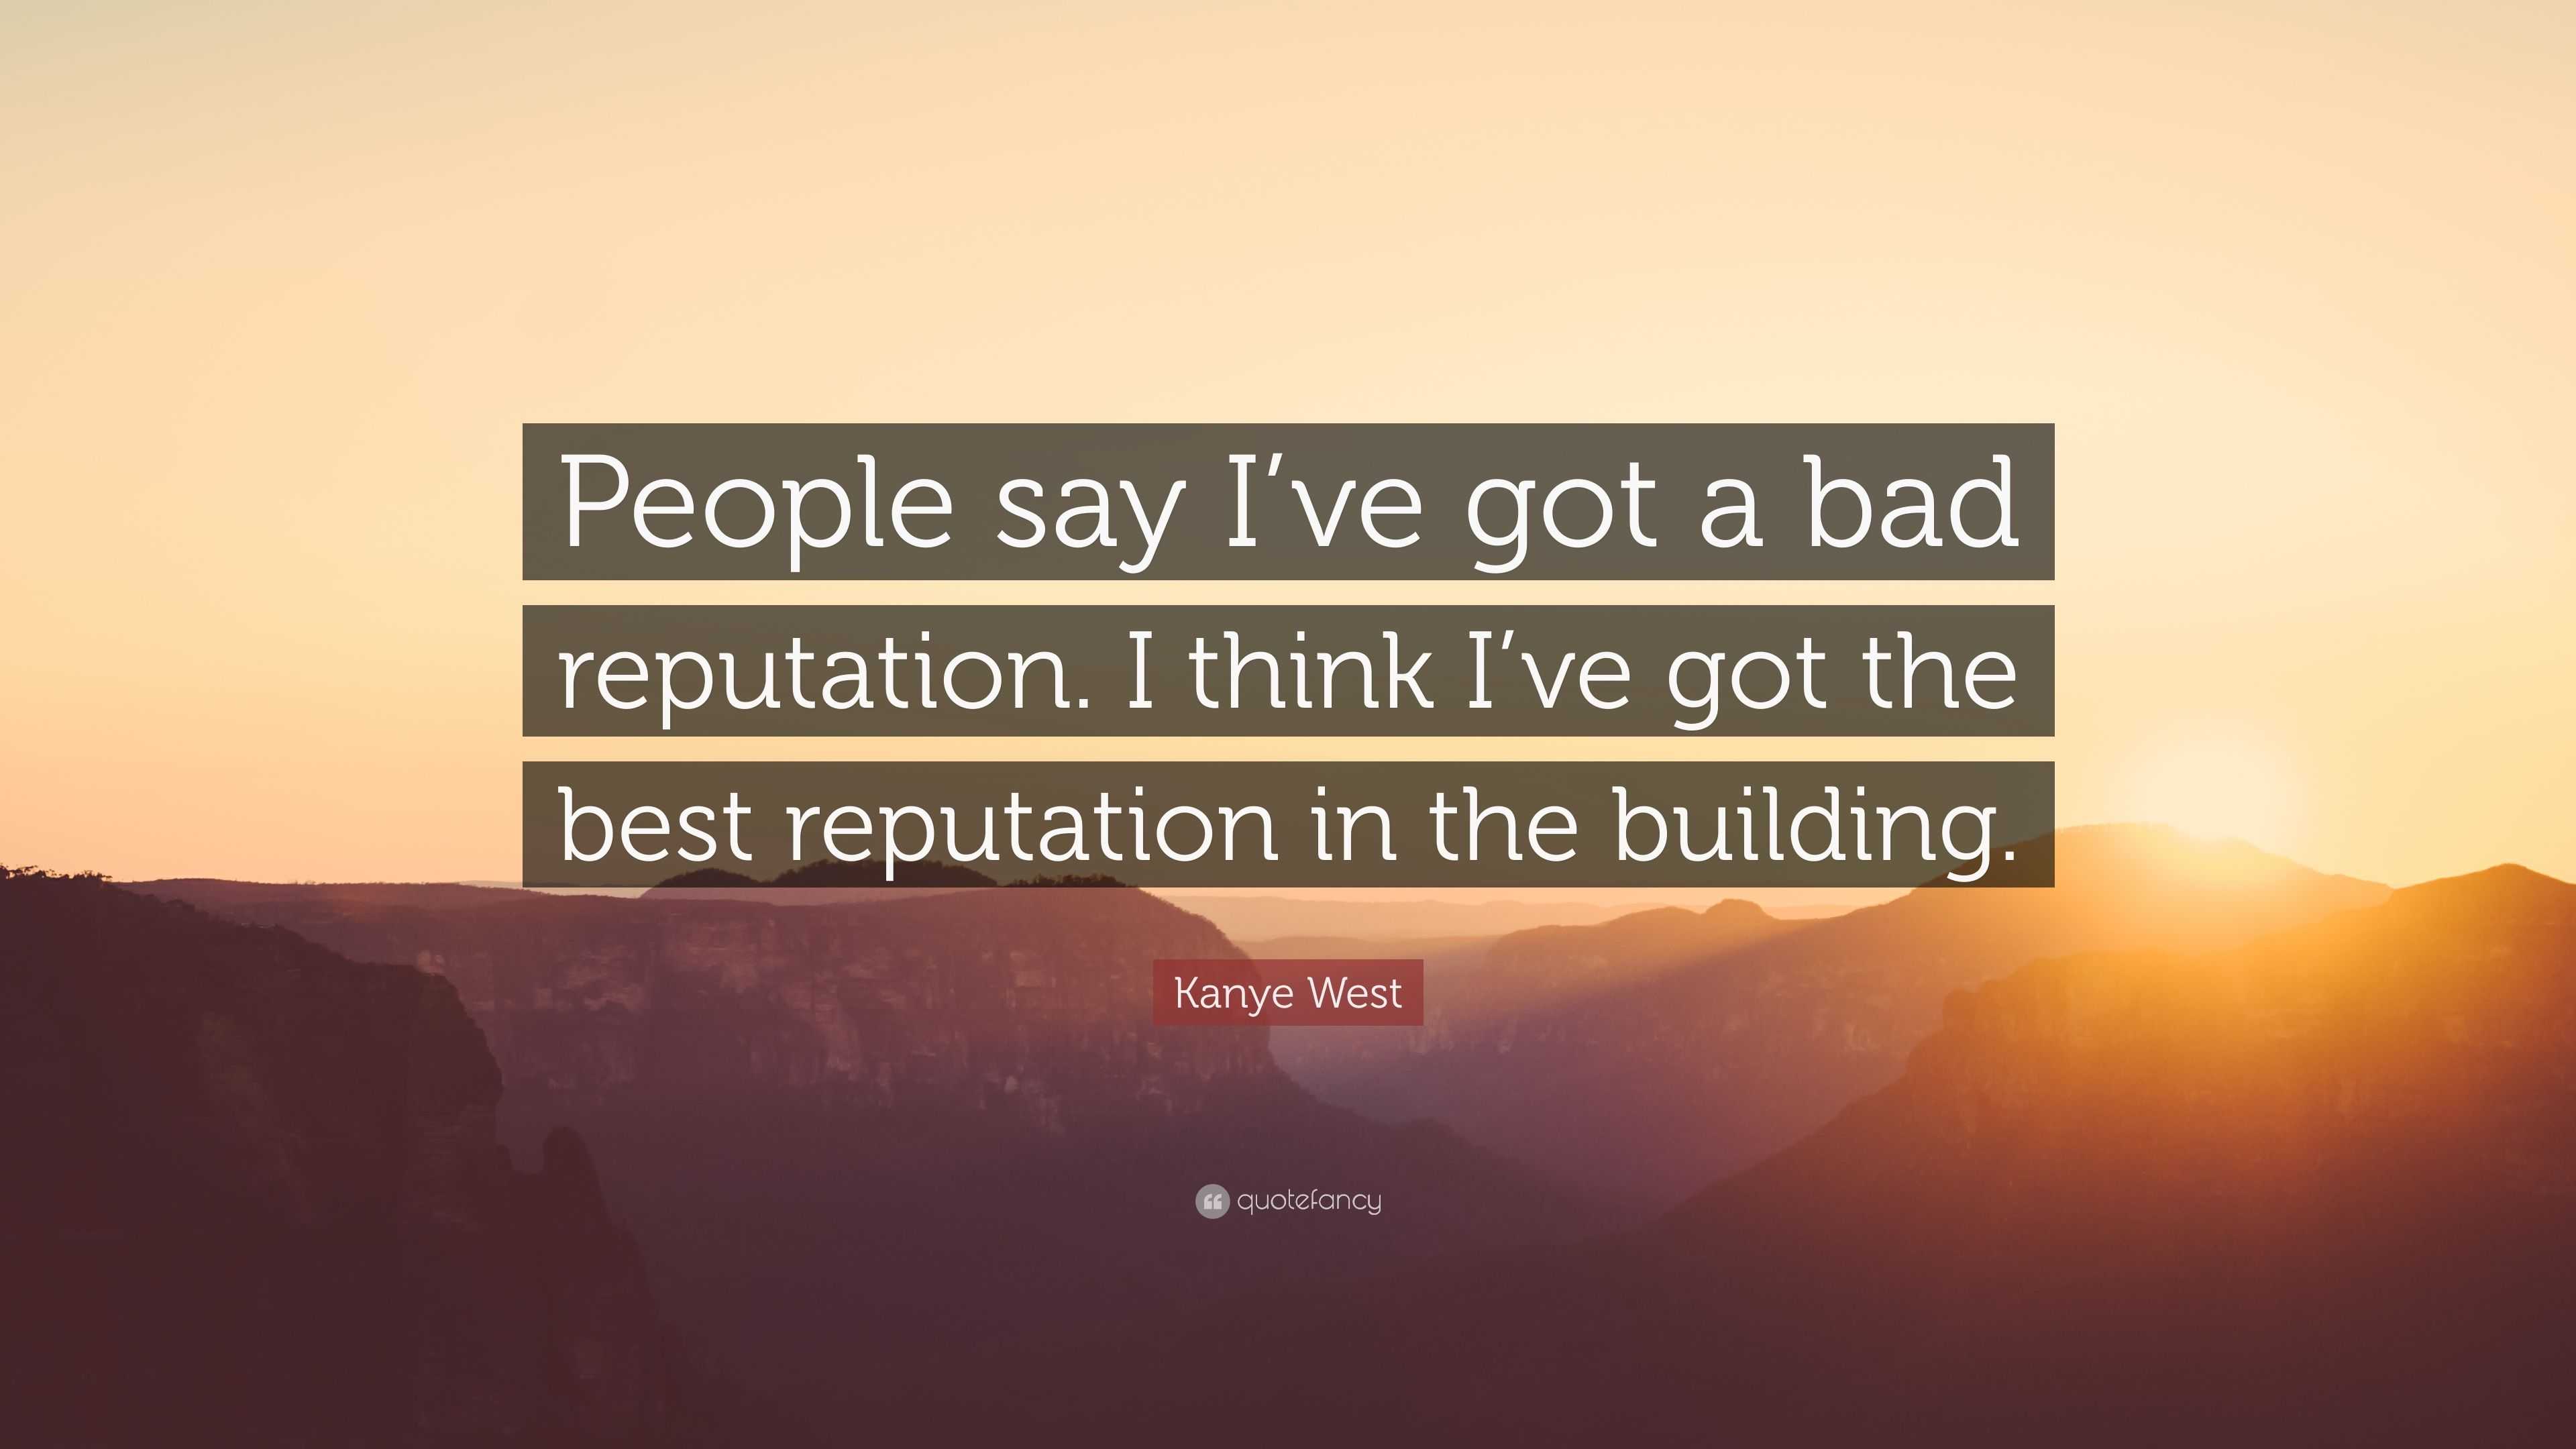 Kanye West Quote: “People say I've got a bad reputation. I think I ...